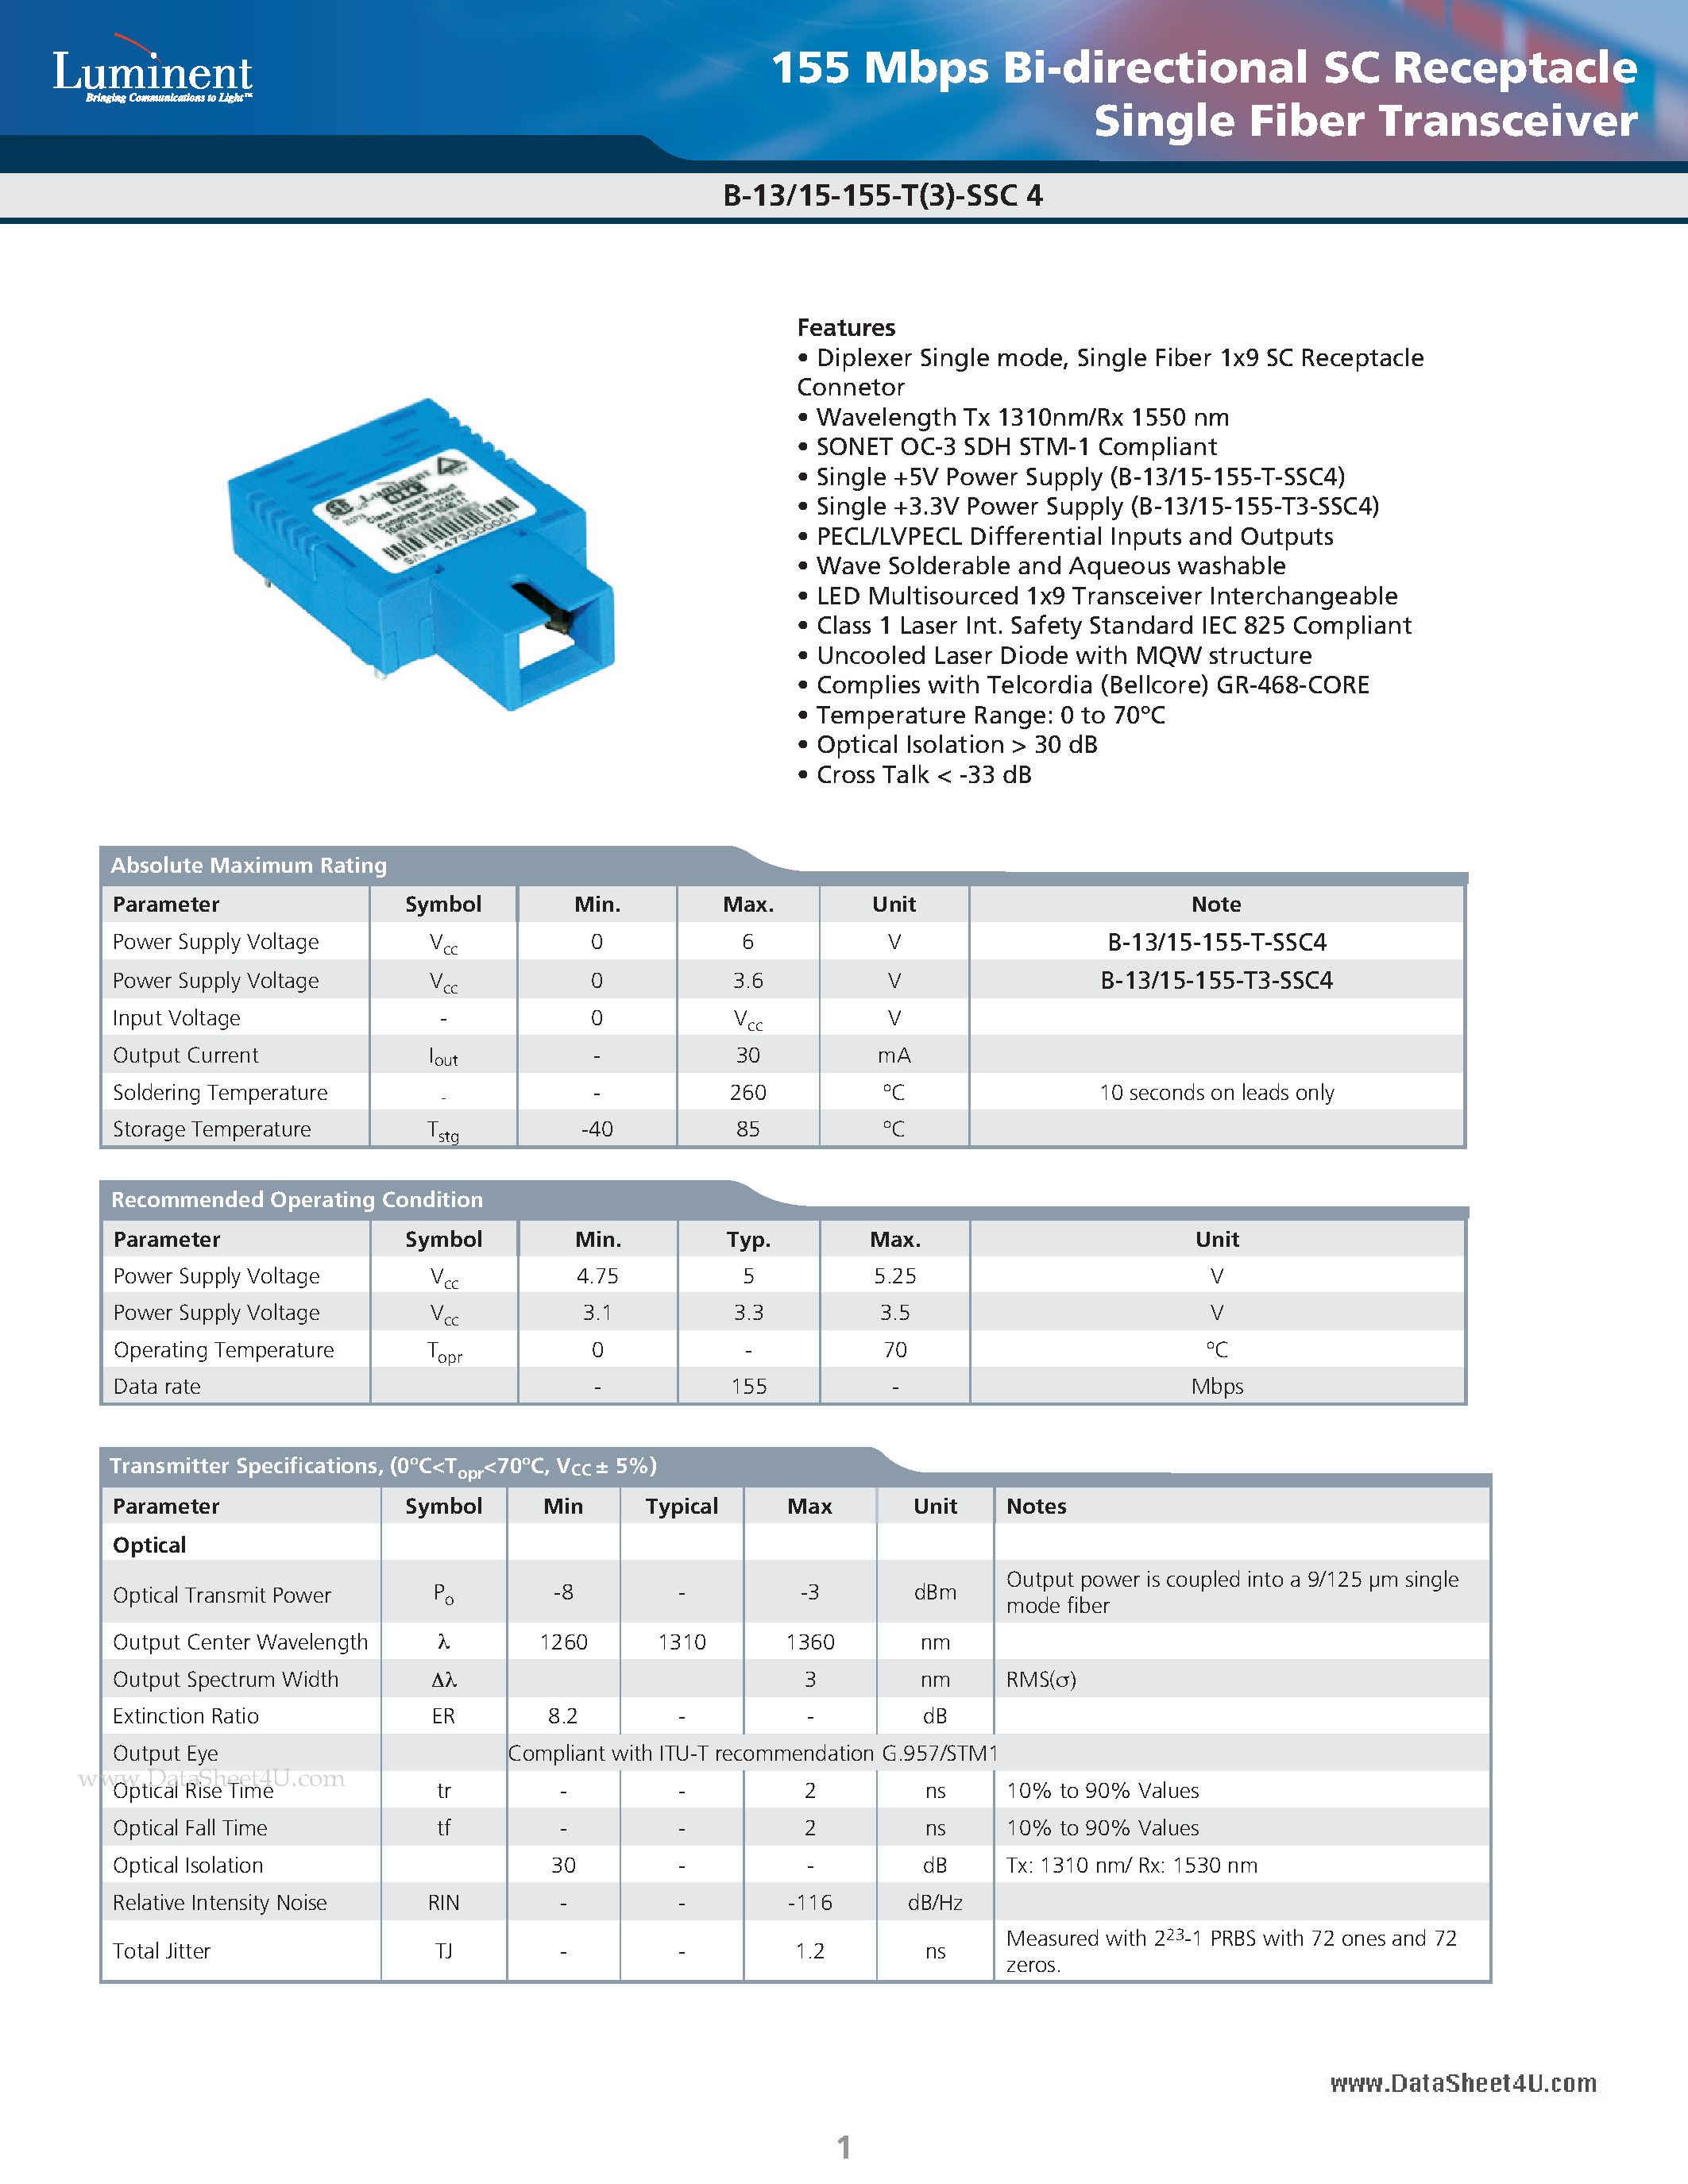 Datasheet B-13-15-155-T-SSC4 - 155 Mbps Bi-directional SC Receptacle Single Fiber Transceiver page 1